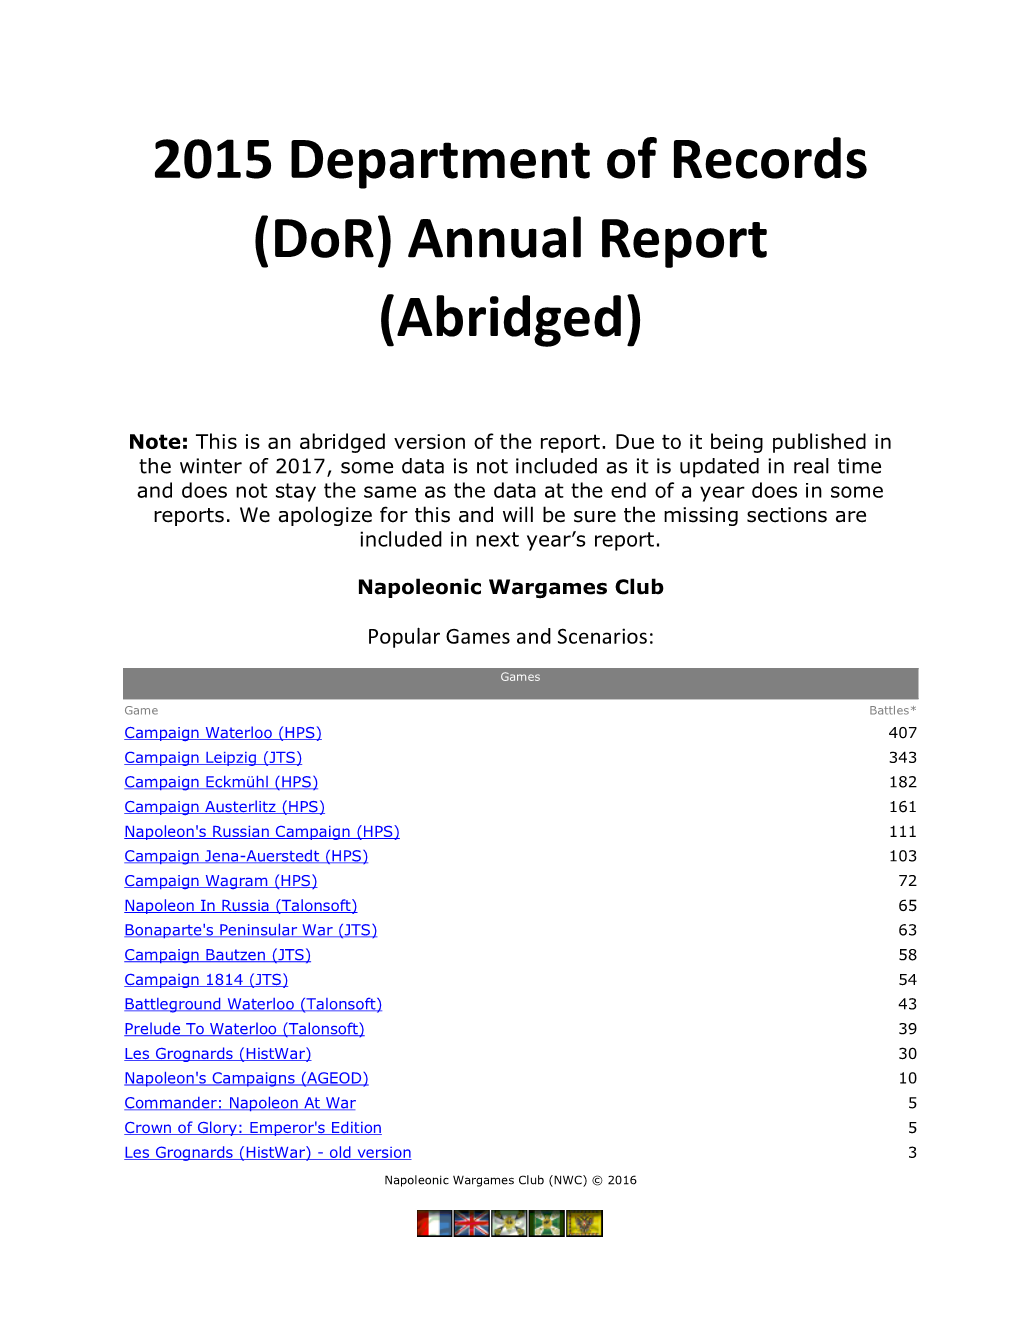 Annual Report (Abridged)